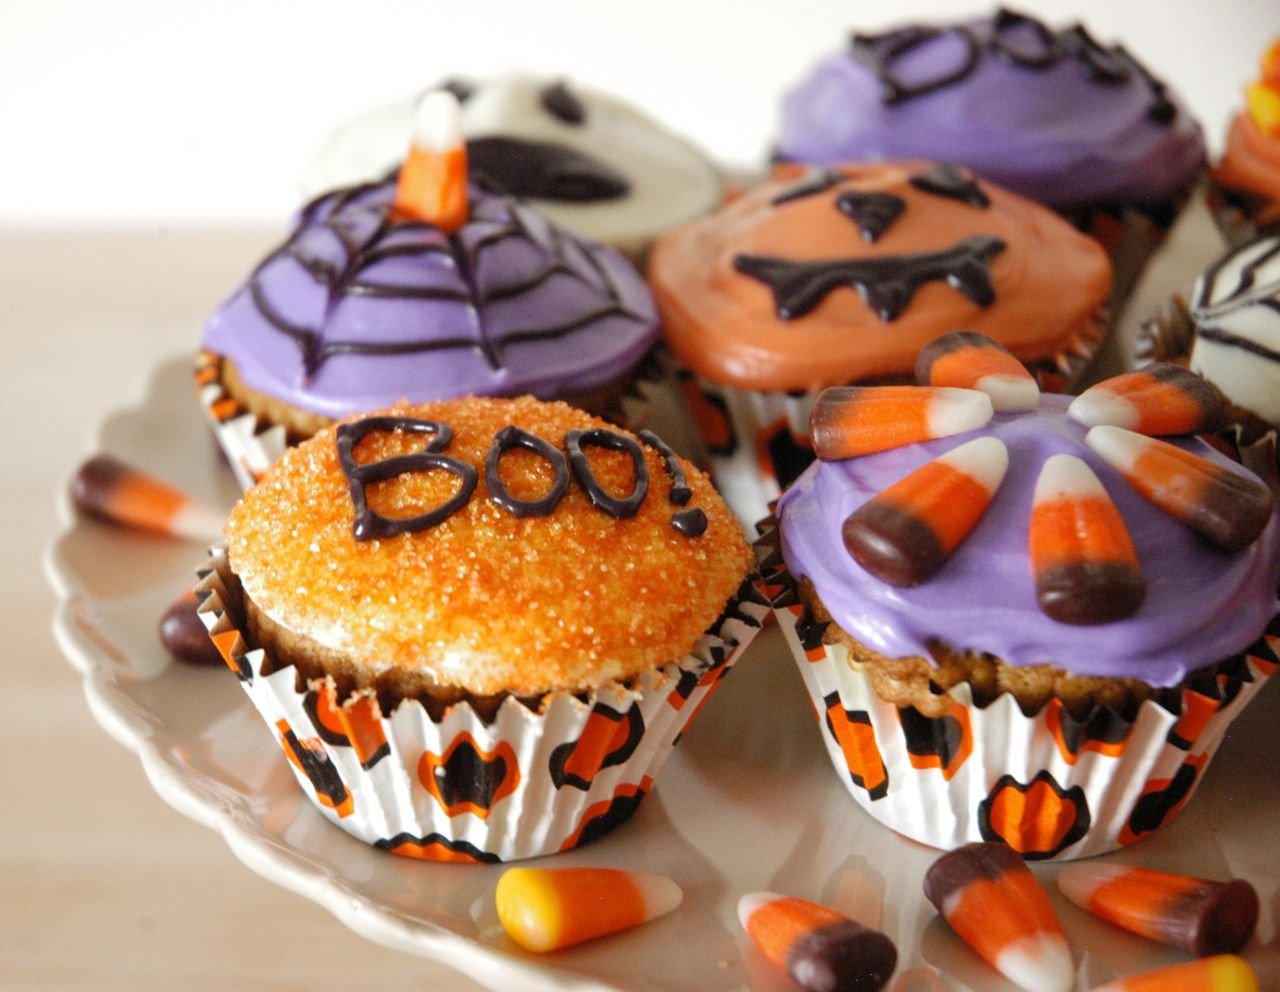 Scary Halloween Cupcakes
 Goddess of Baking Spiced Pumpkin Cupcakes for Halloween